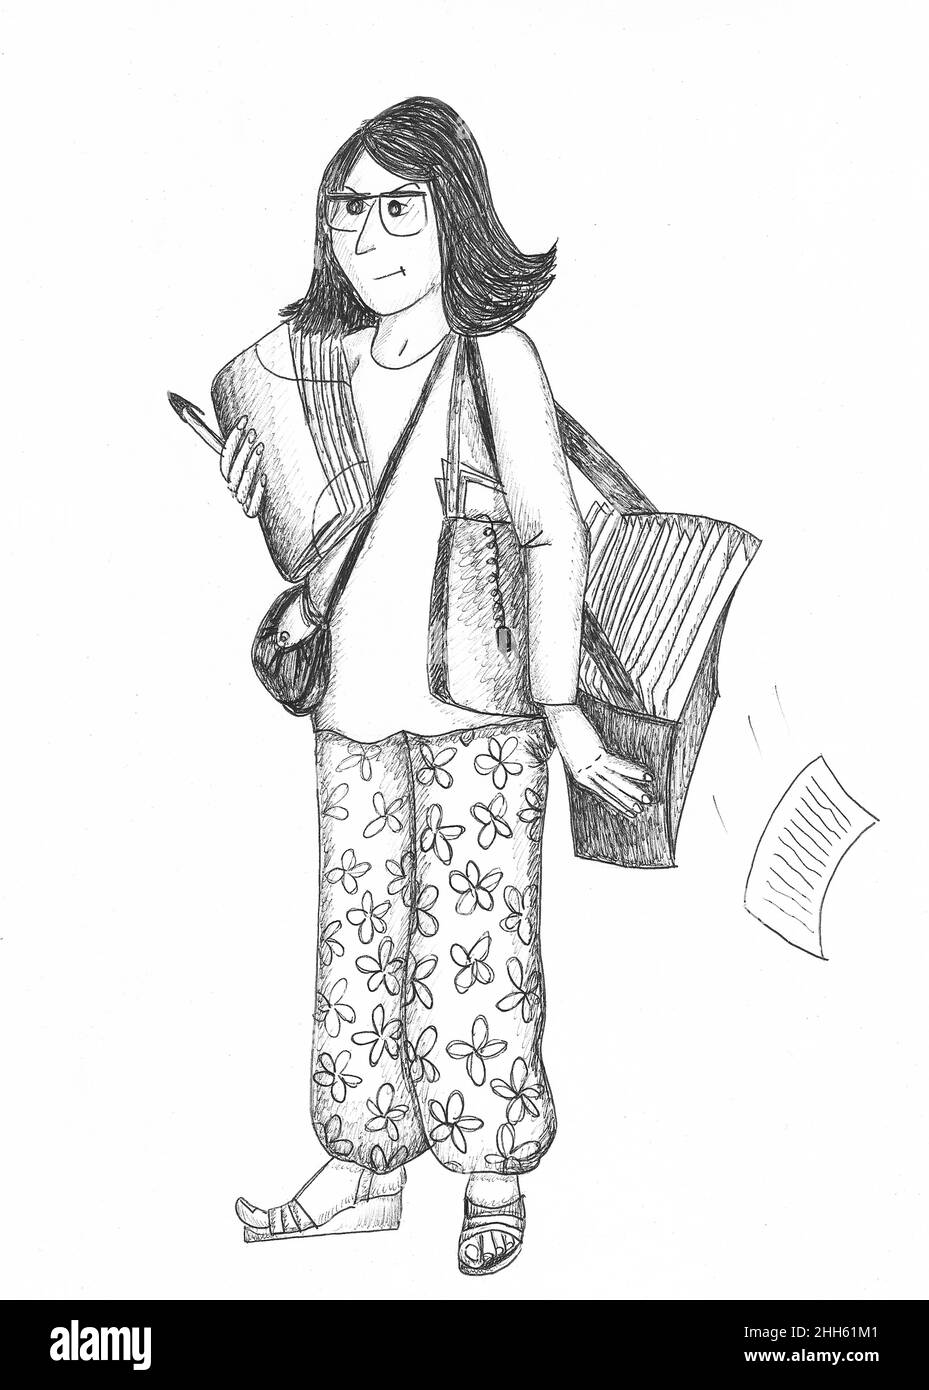 Teacher carrying bags full of exams. Illustration. Stock Photo